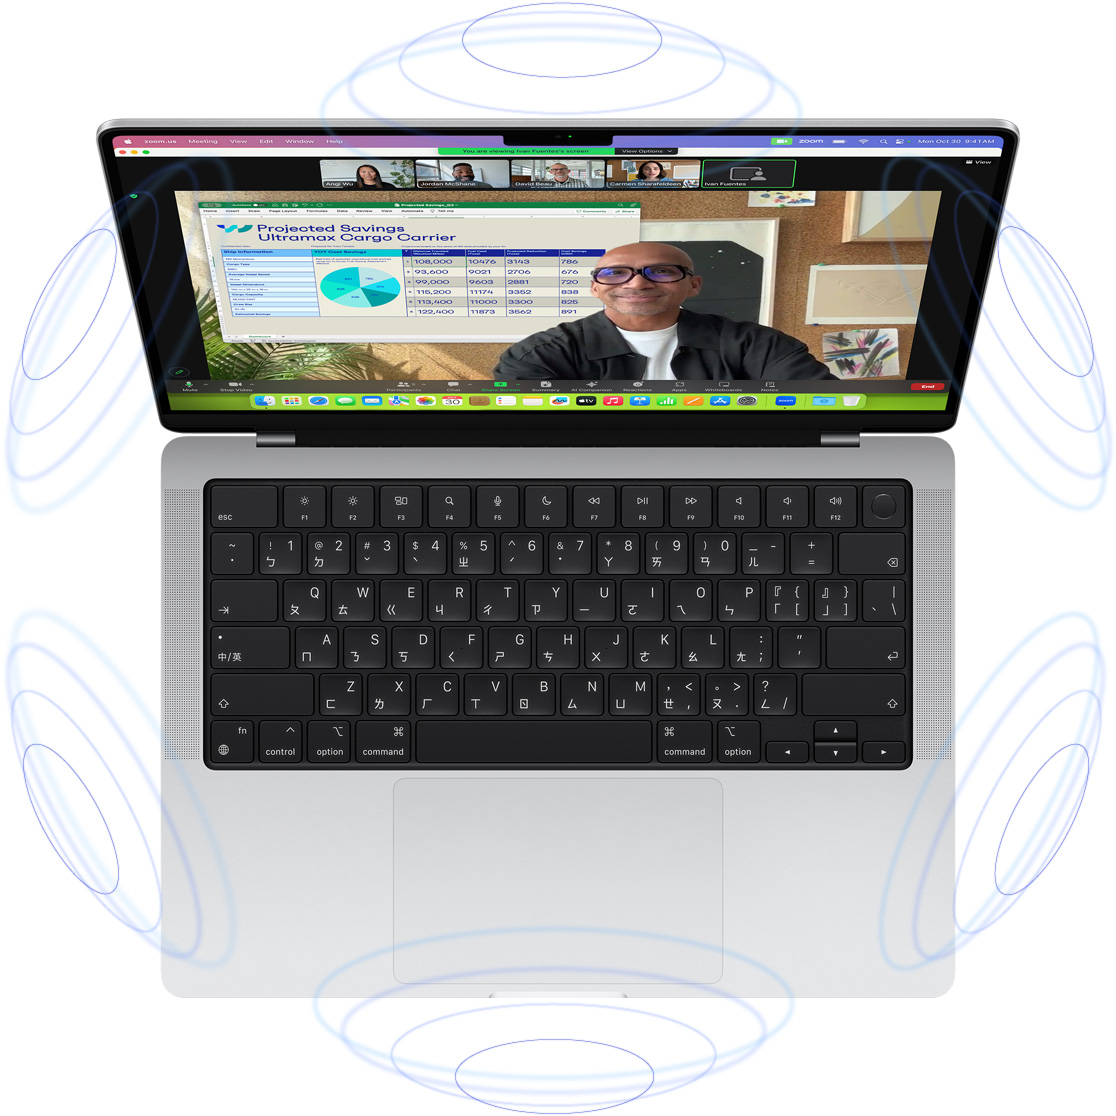 MacBook Pro 上的 FaceTime 視訊通話，環繞著的藍色圓圈插圖表現出空間音訊的 3D 感。